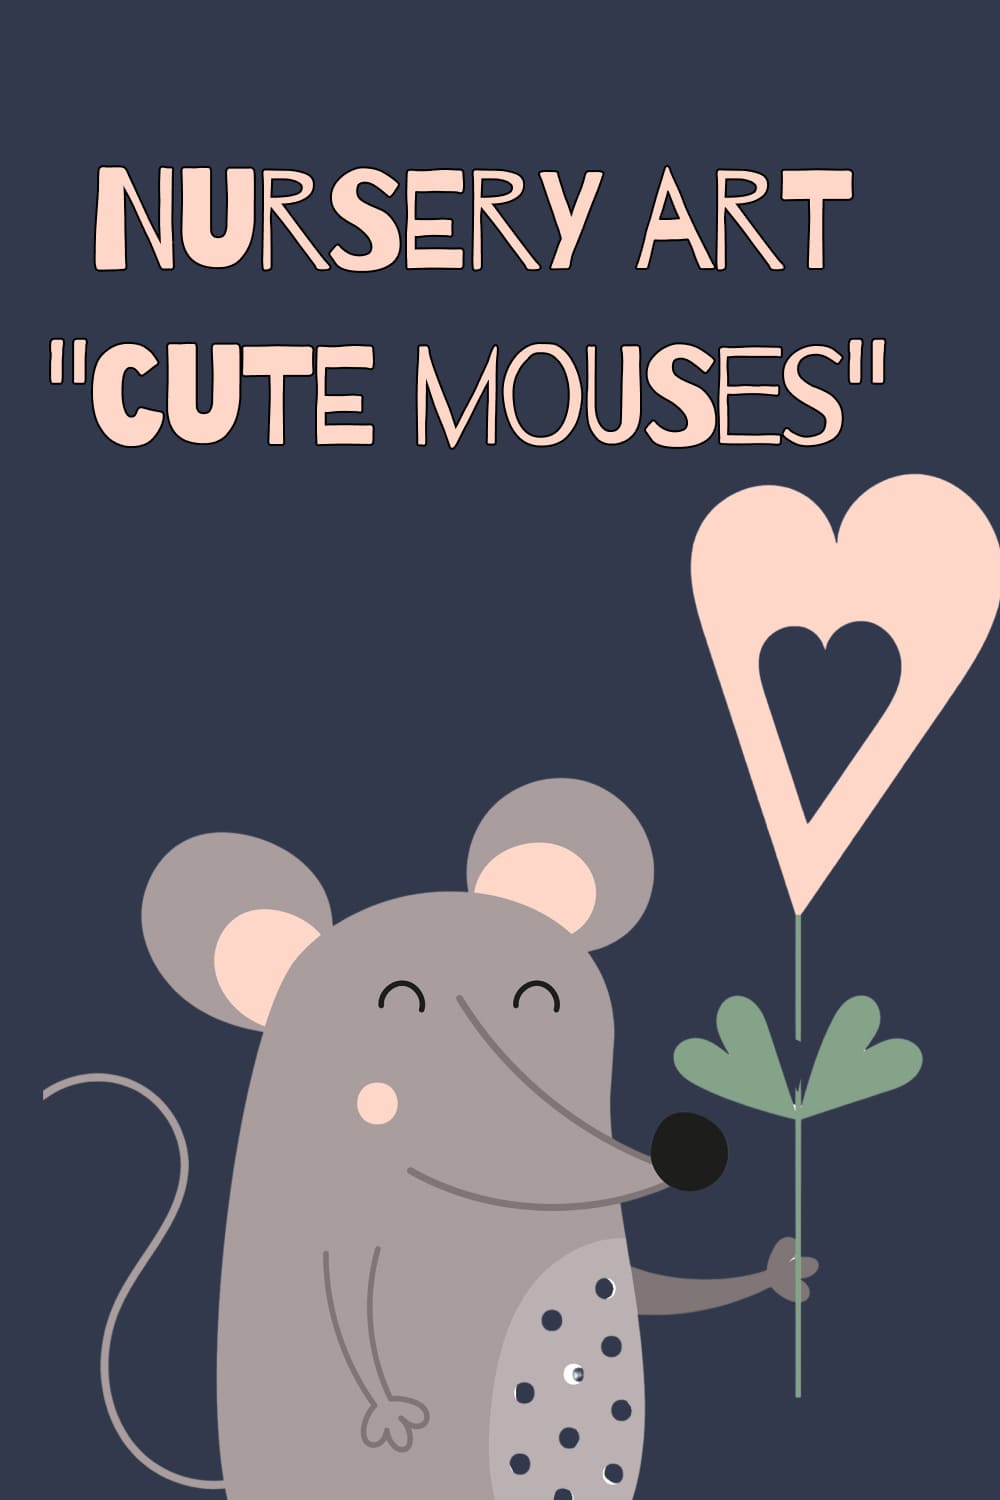 So cute mouses see sweet dreams.